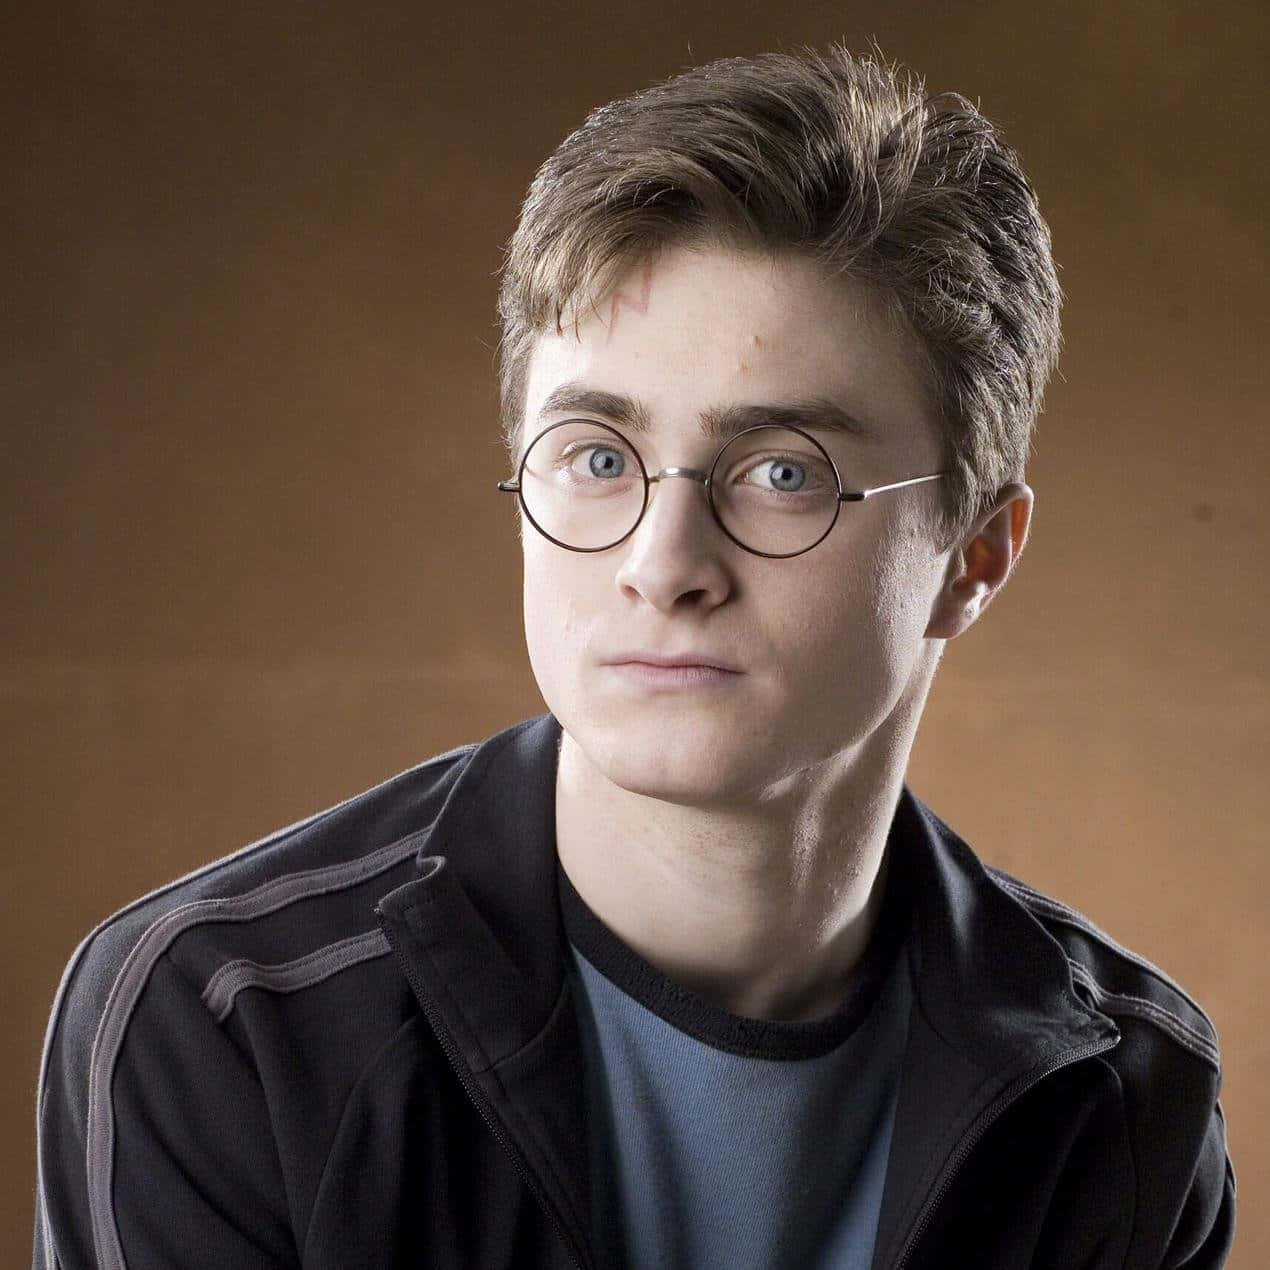 A profile portrait of the beloved Harry Potter